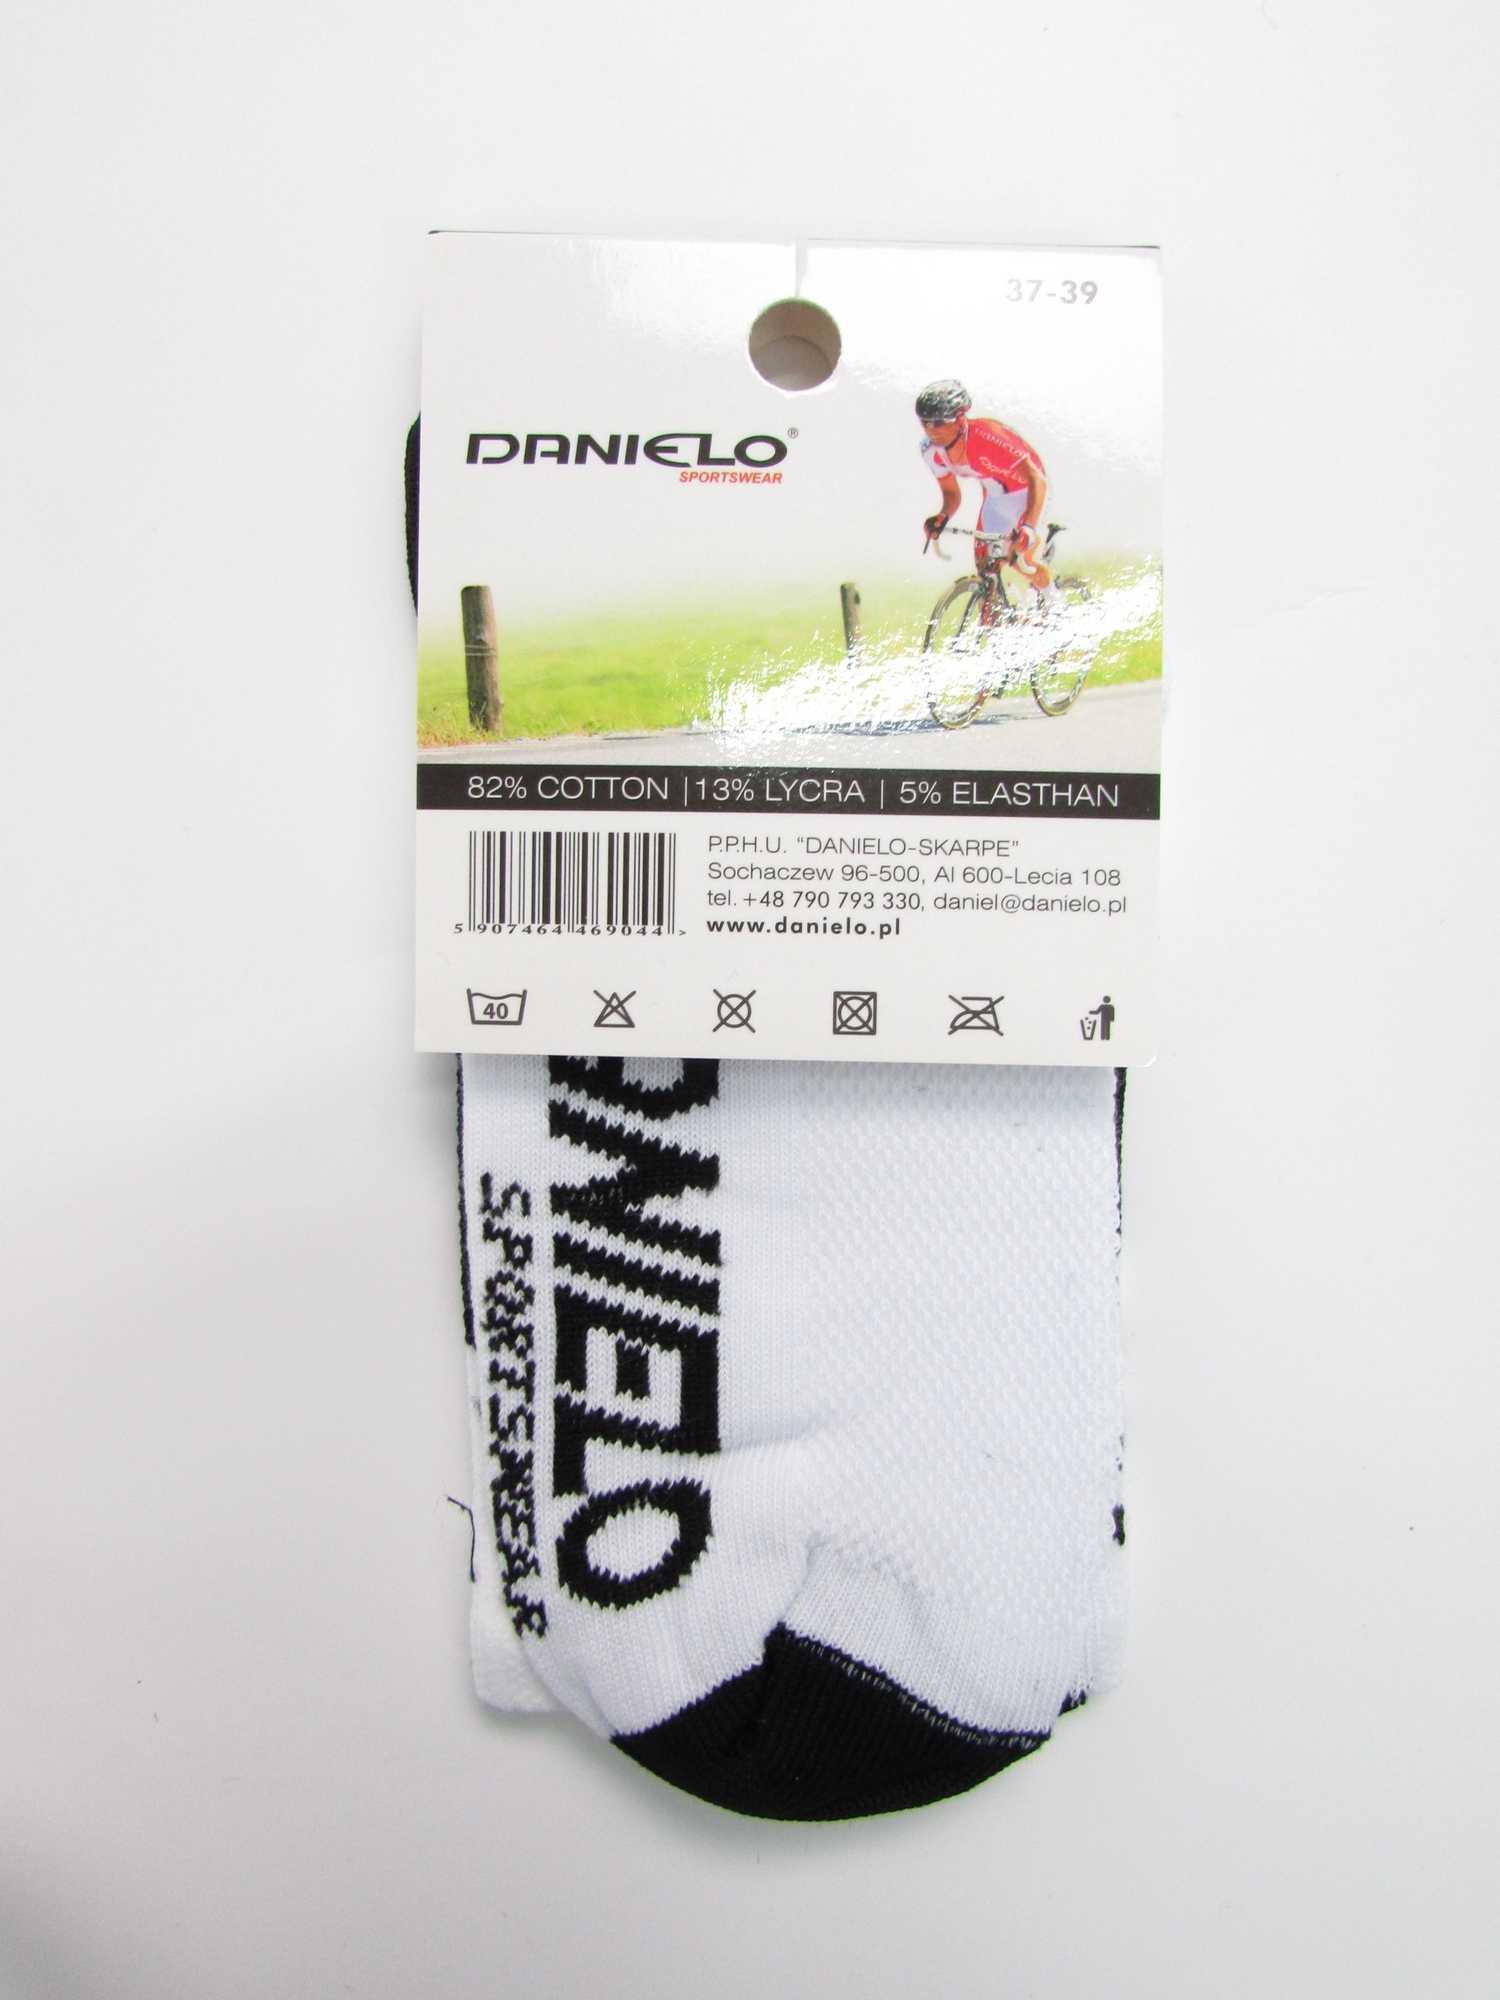 Danielo Professional Cycling Socks white/black size 37-39 (S)